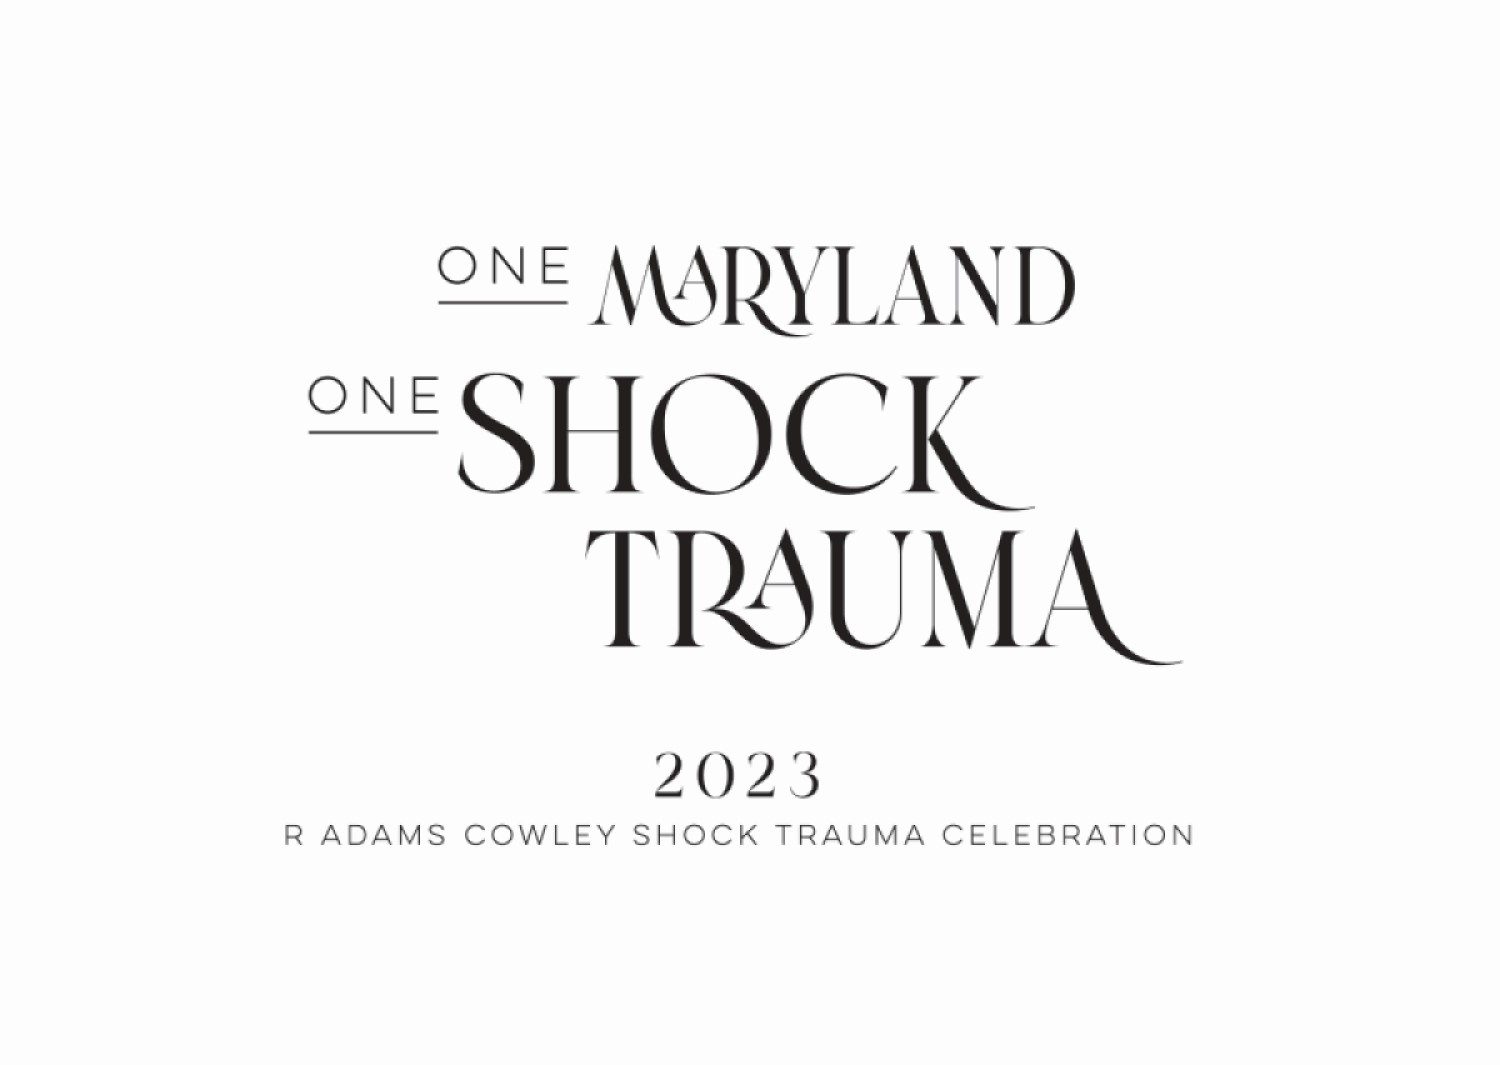 One Maryland, One Shock Trauma logo